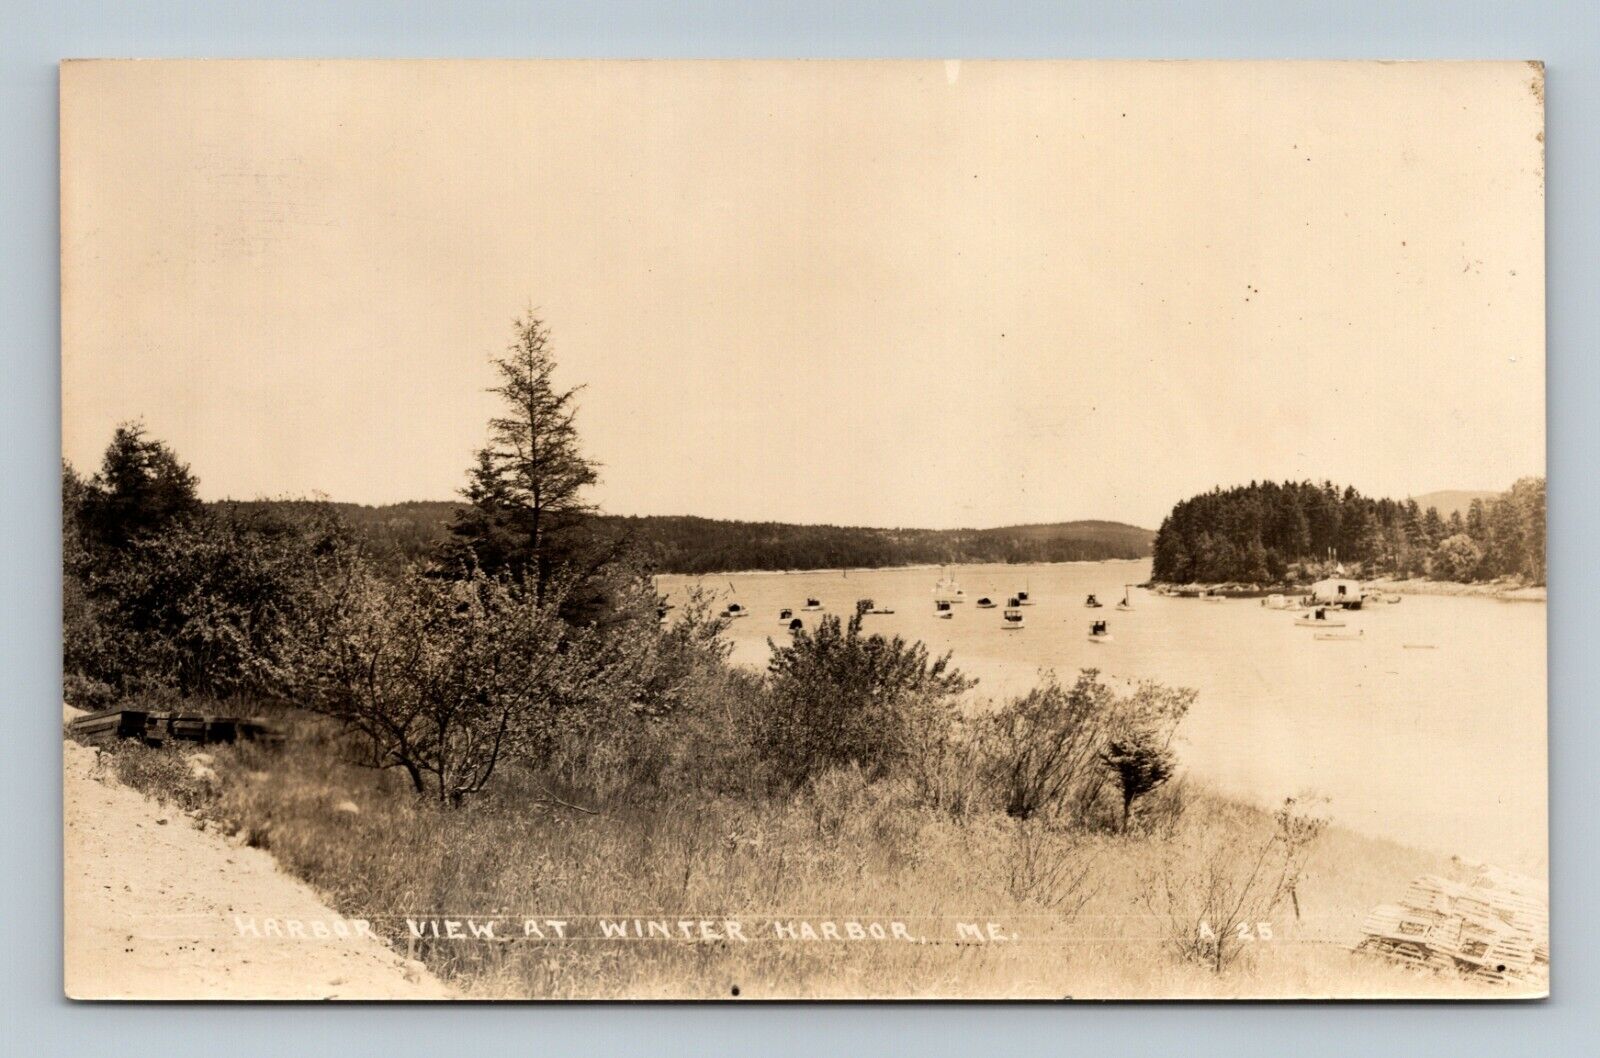 Harbor View at Winter Harbor Maine Postcard